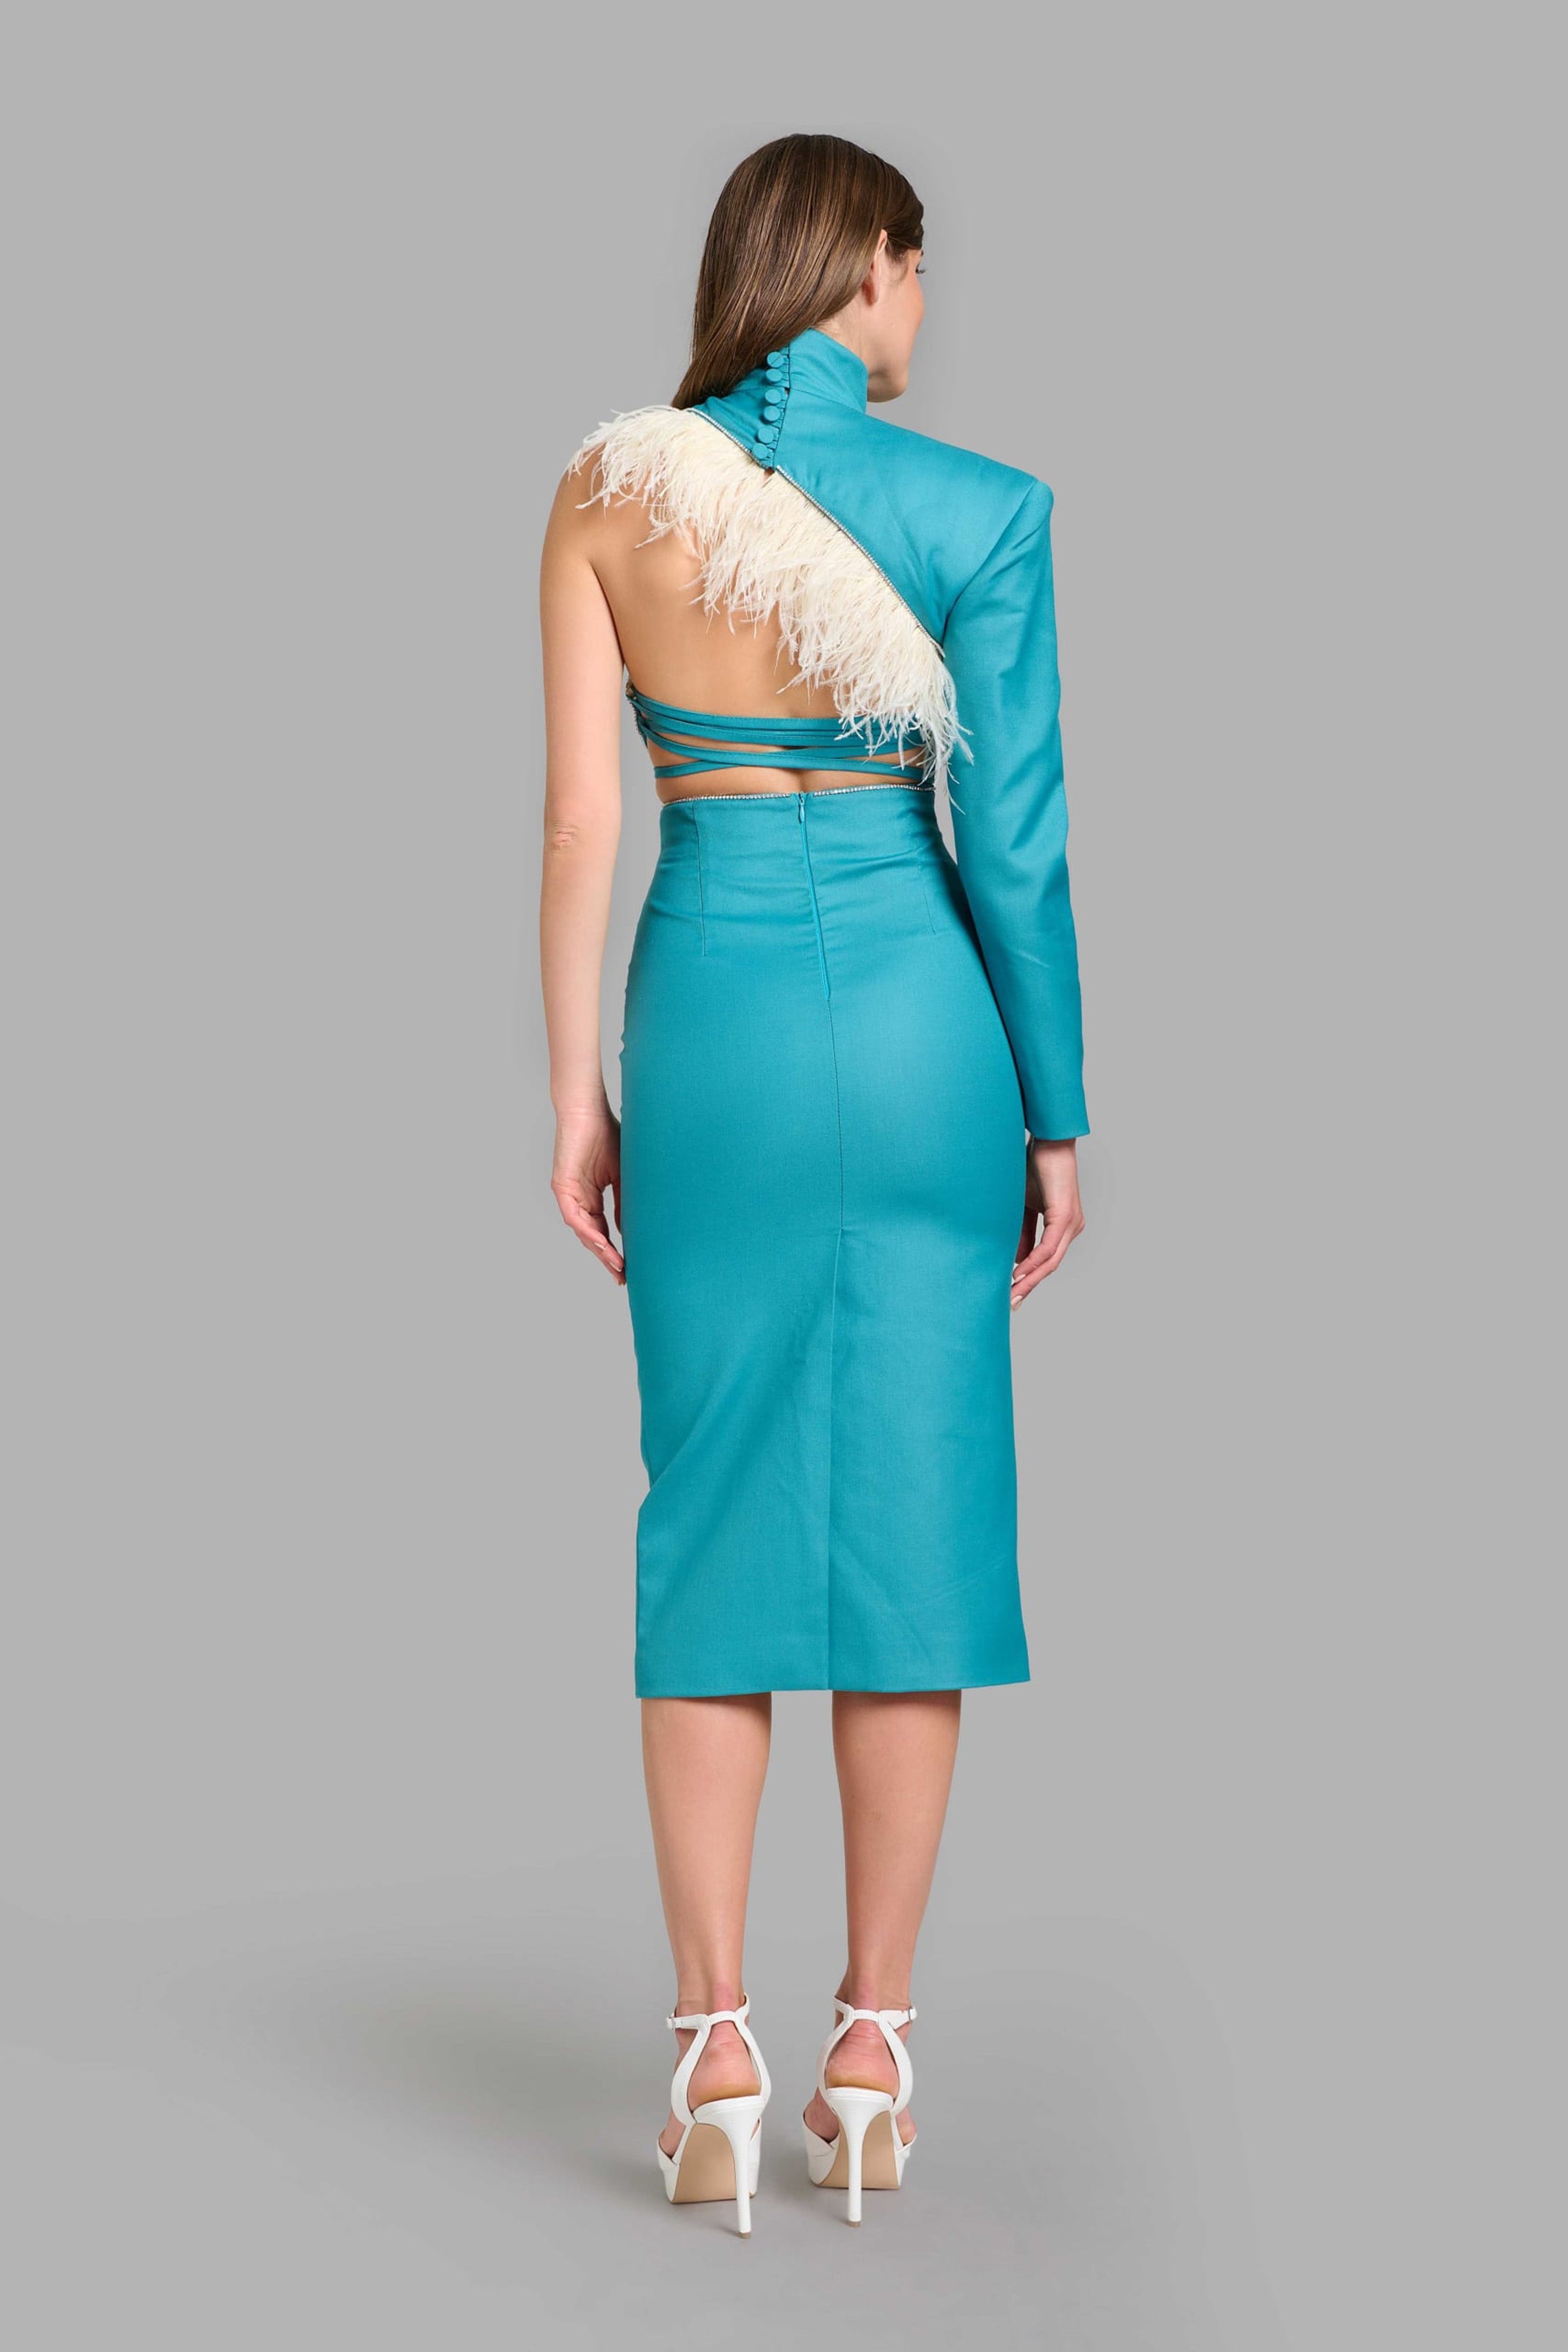 One Shoulder Turquoise Dress